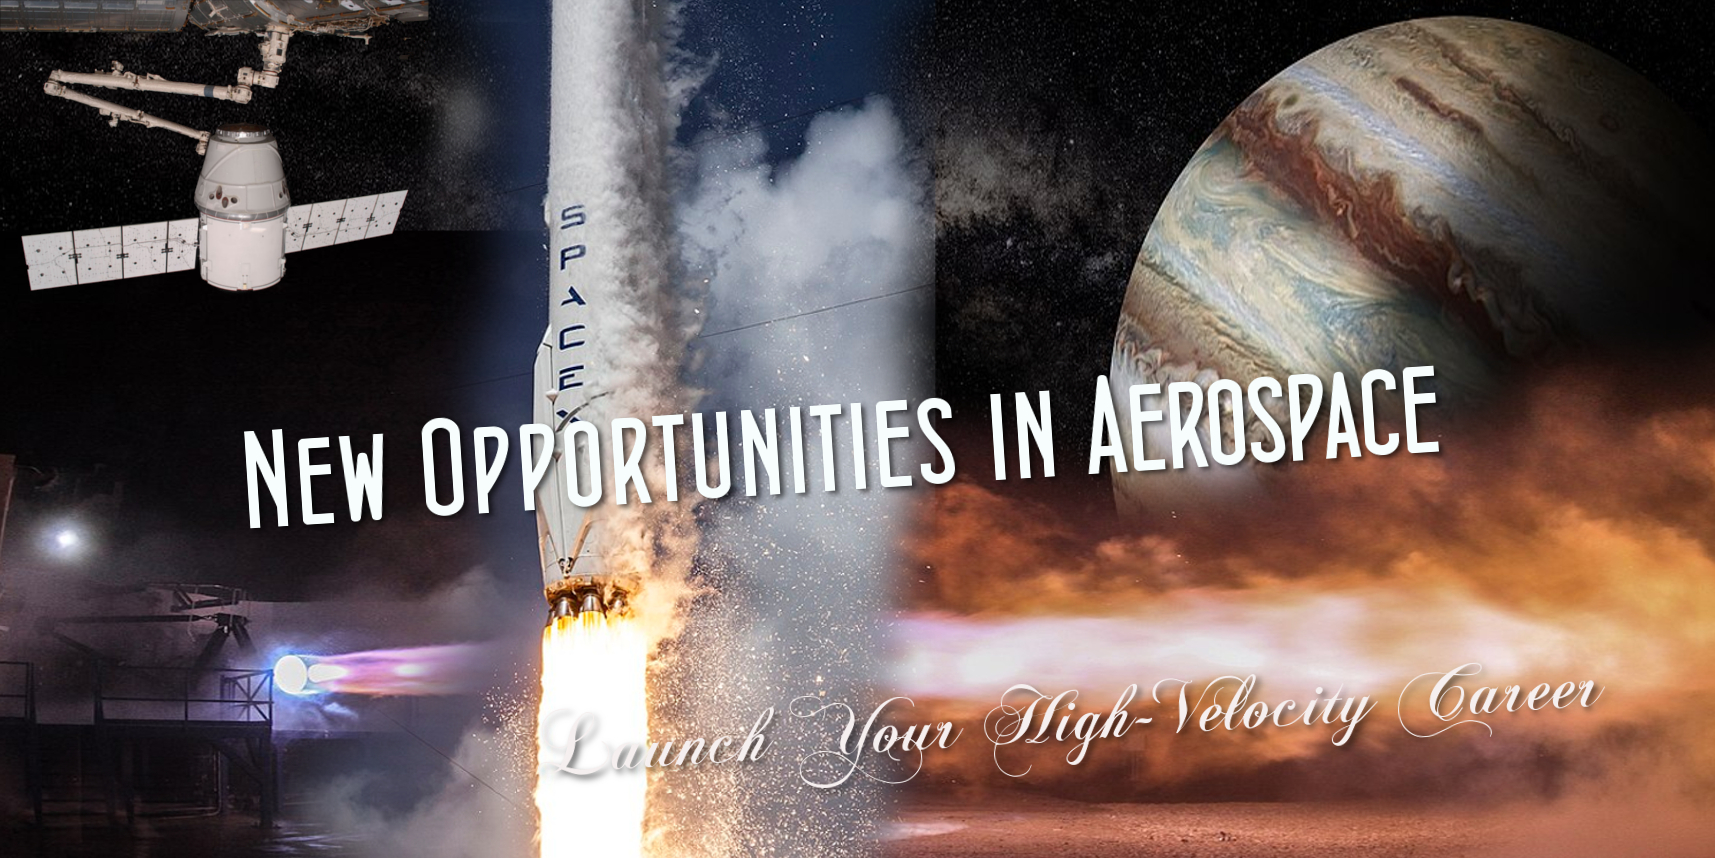 Paralegal LDA High Velocity Careers in Aerospace